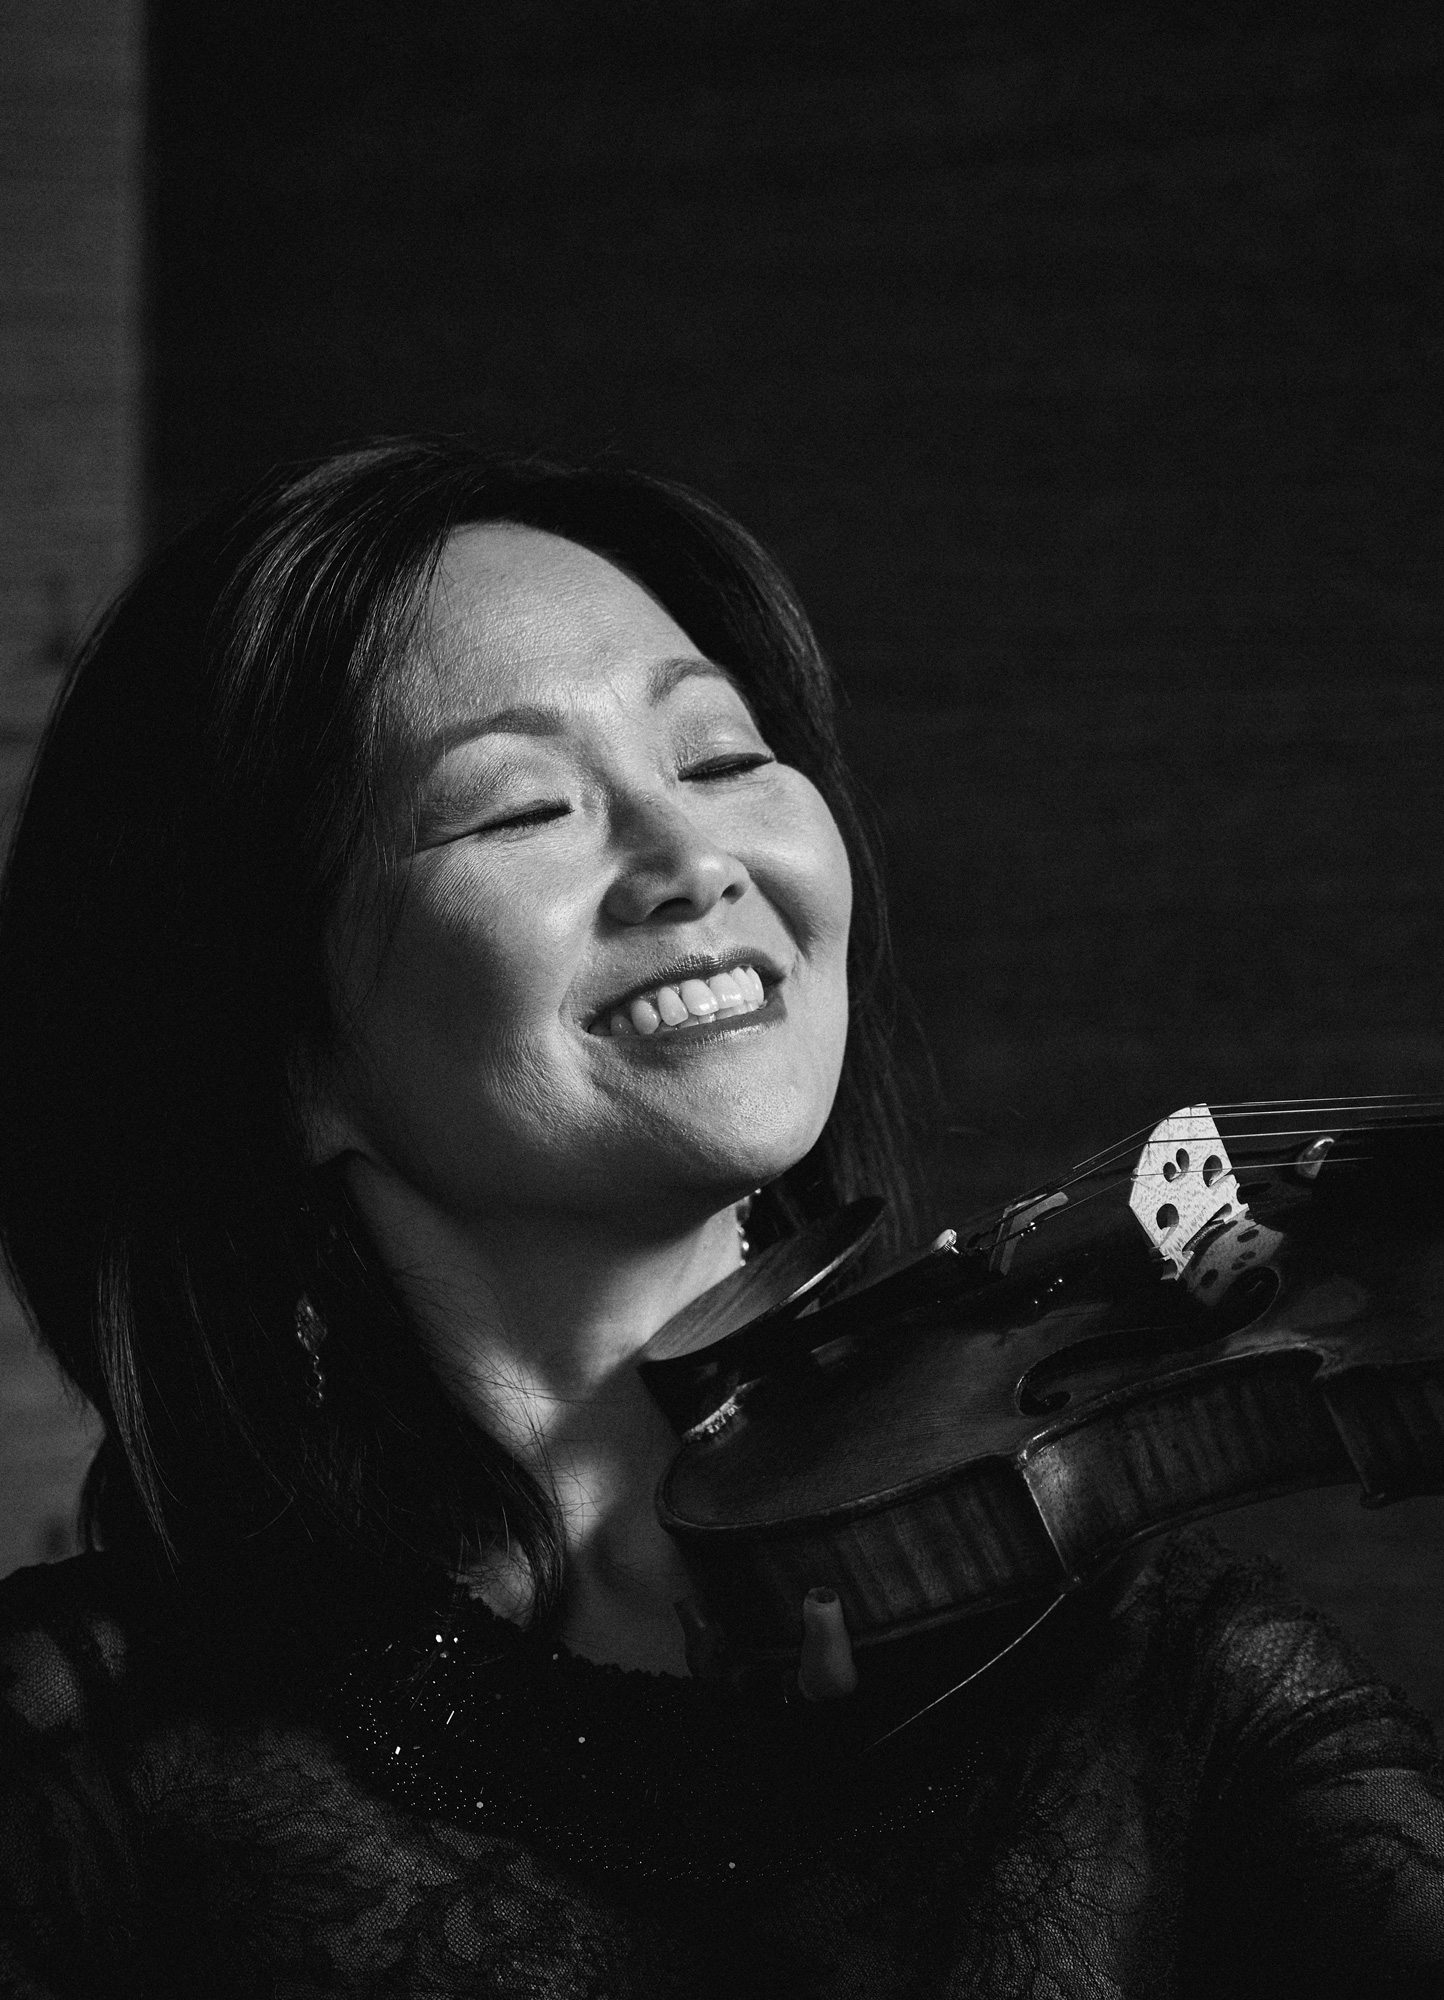 Colorado Symphony yumi hwang willams portrait